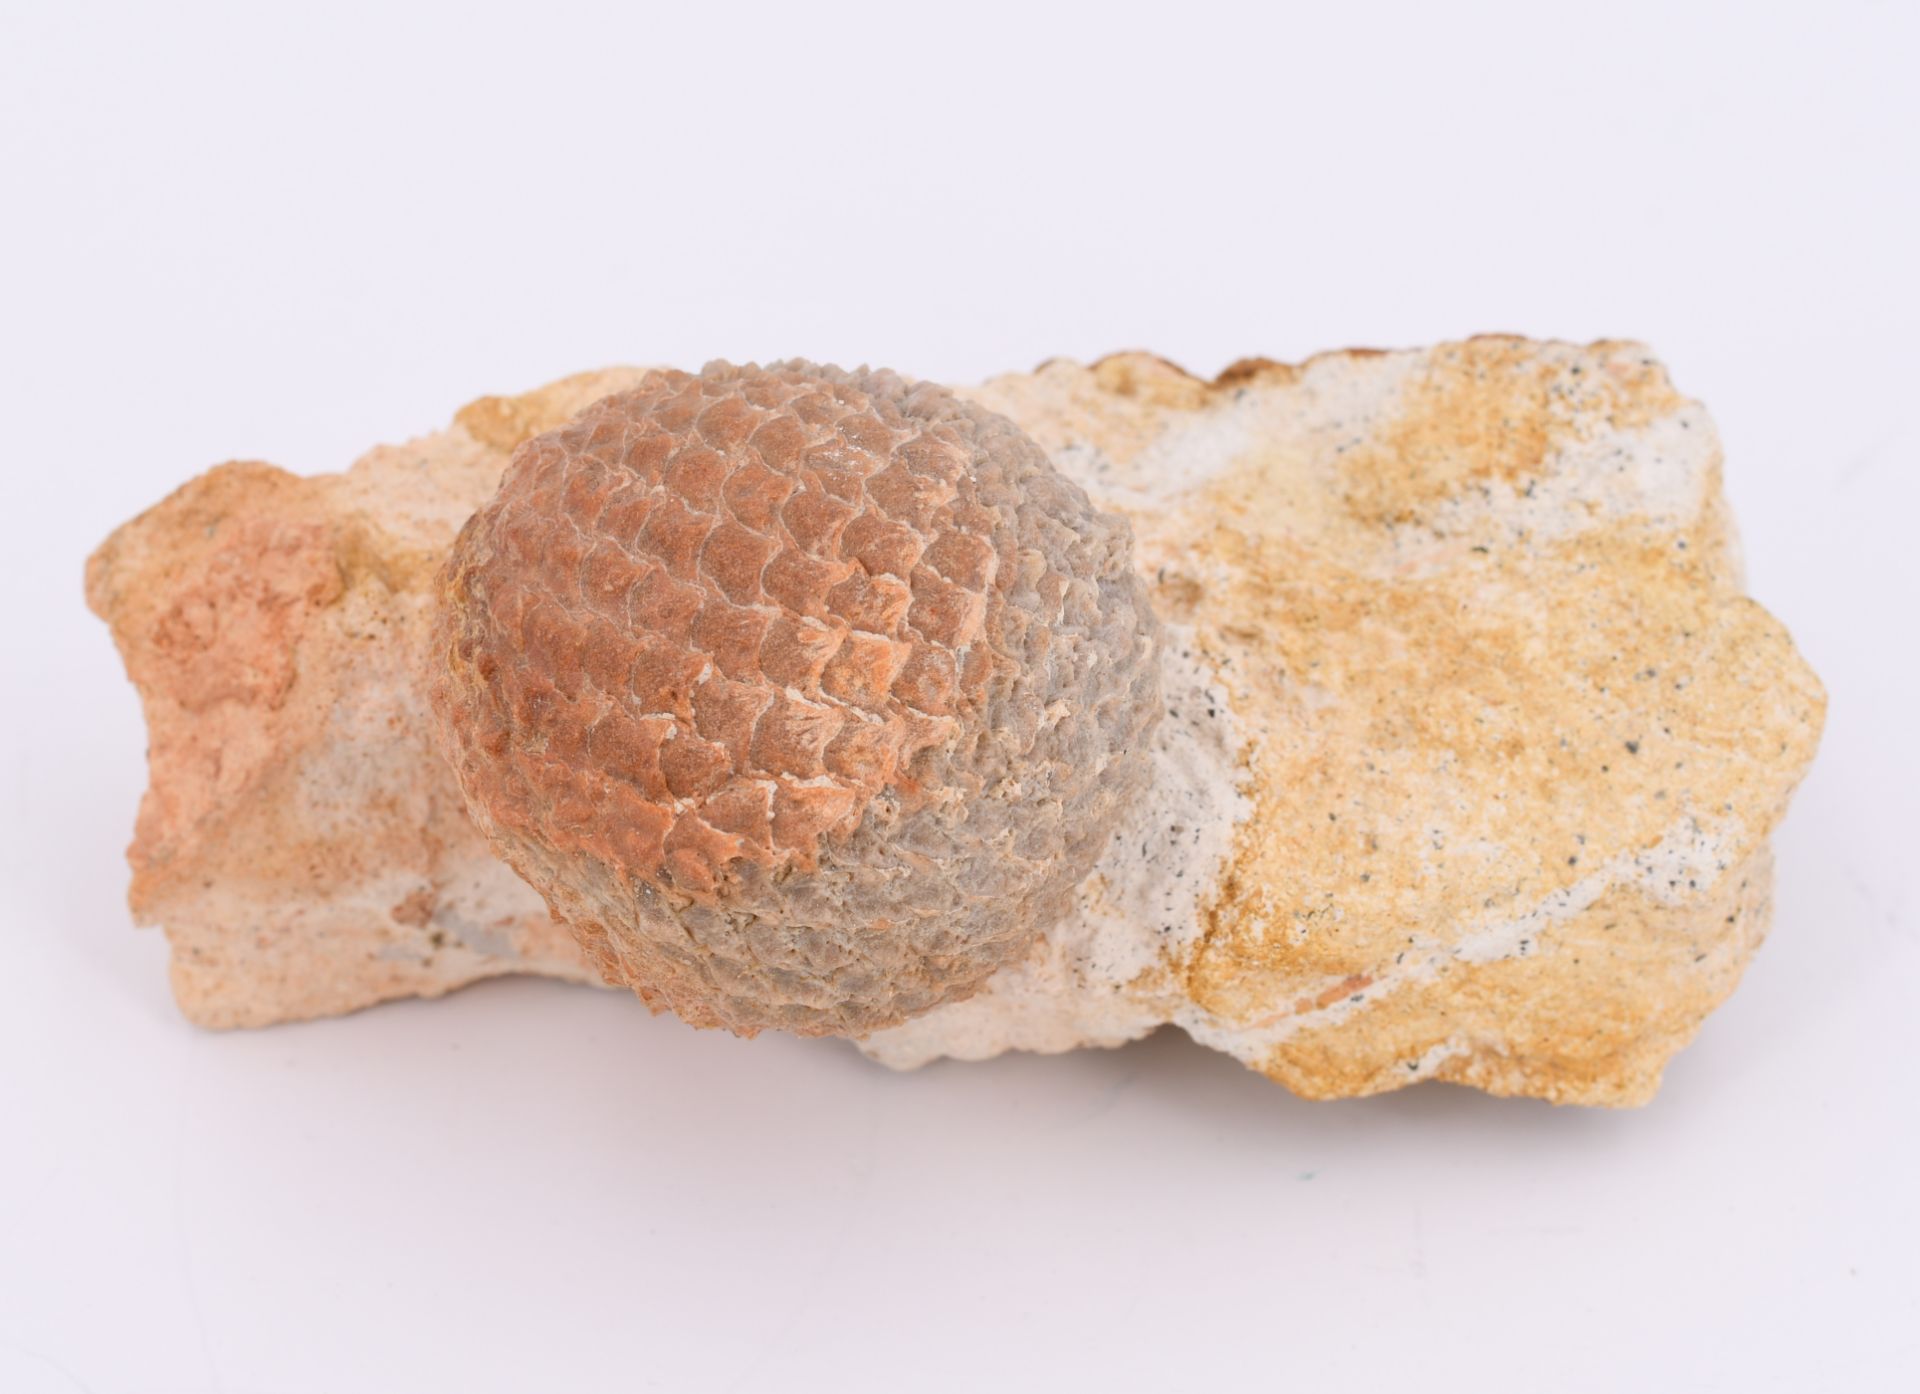 Fossil eines Pinienzapfens 'Araucaria mirabilis' - Image 3 of 9